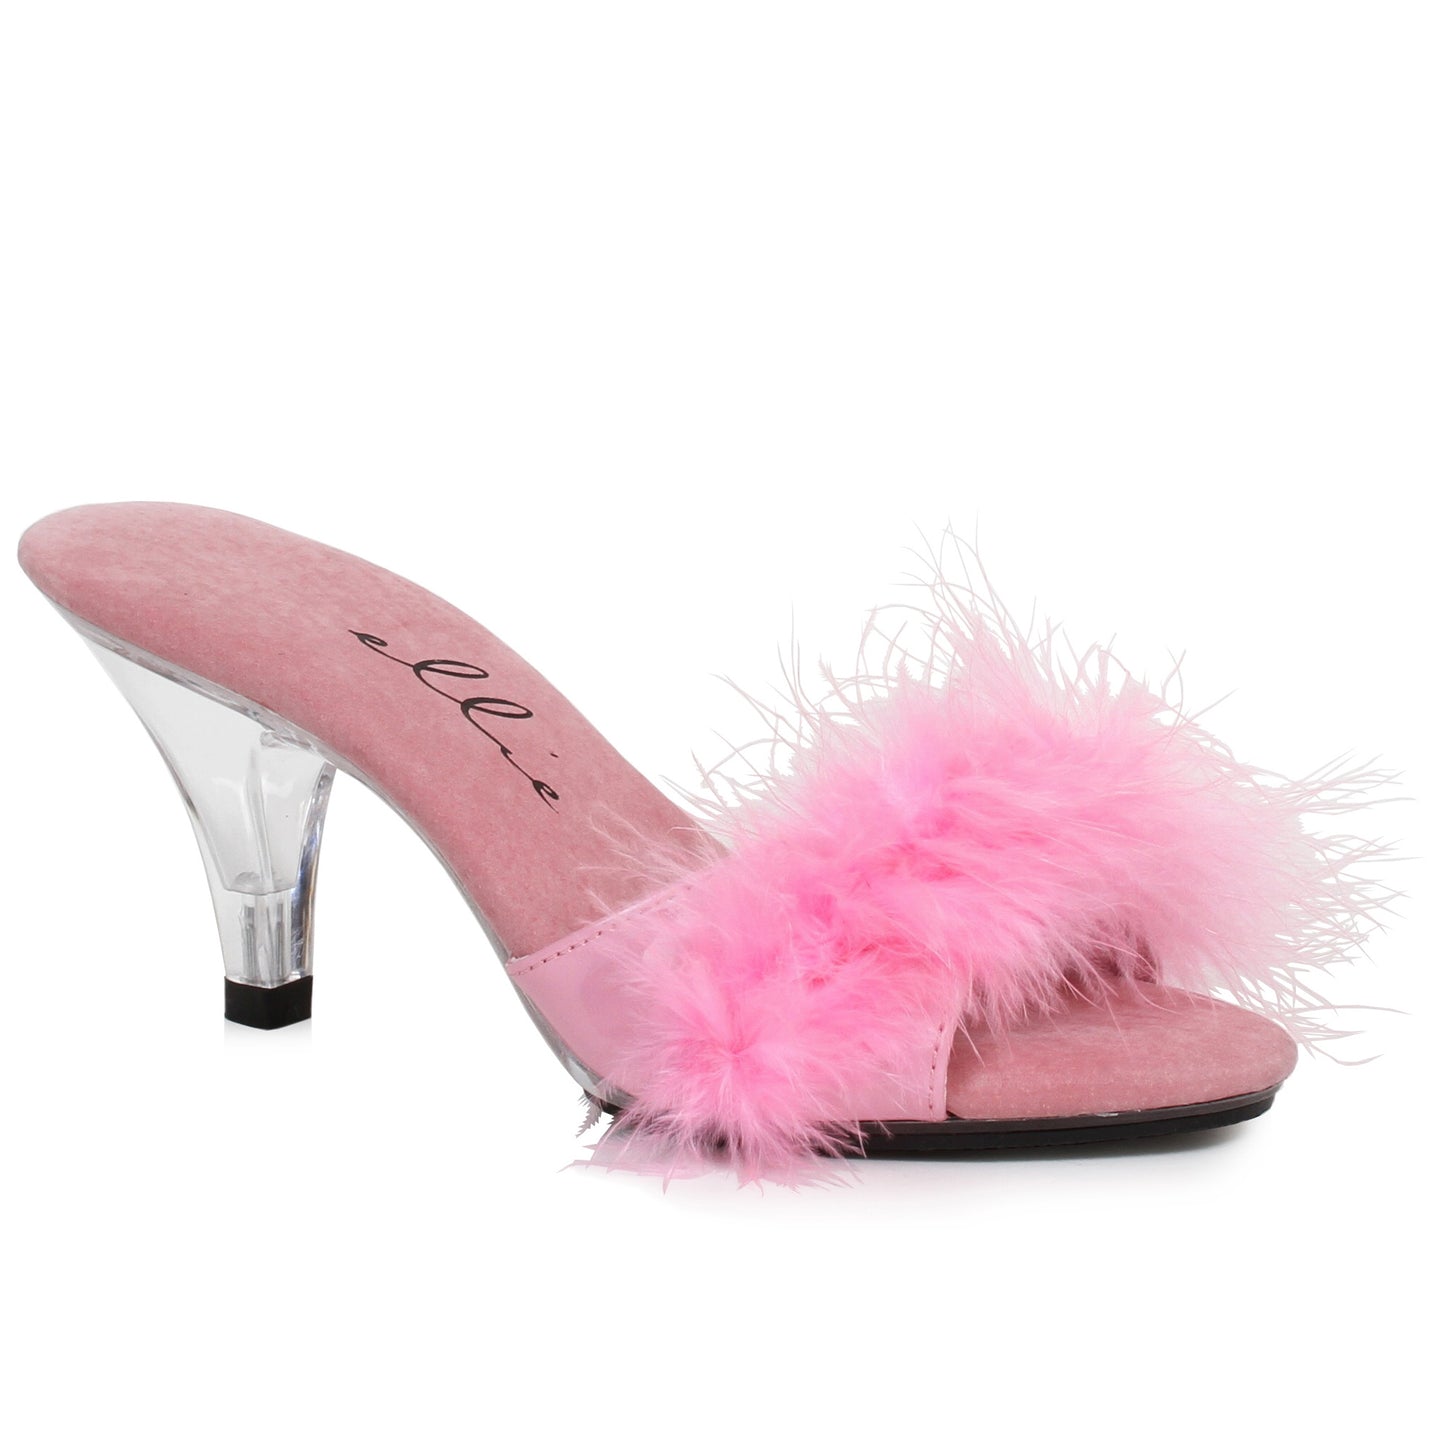 305-SASHA Ellie Shoes 3"  Heel Maribou Slipper. EXTENDED S 3 INCH HEEL